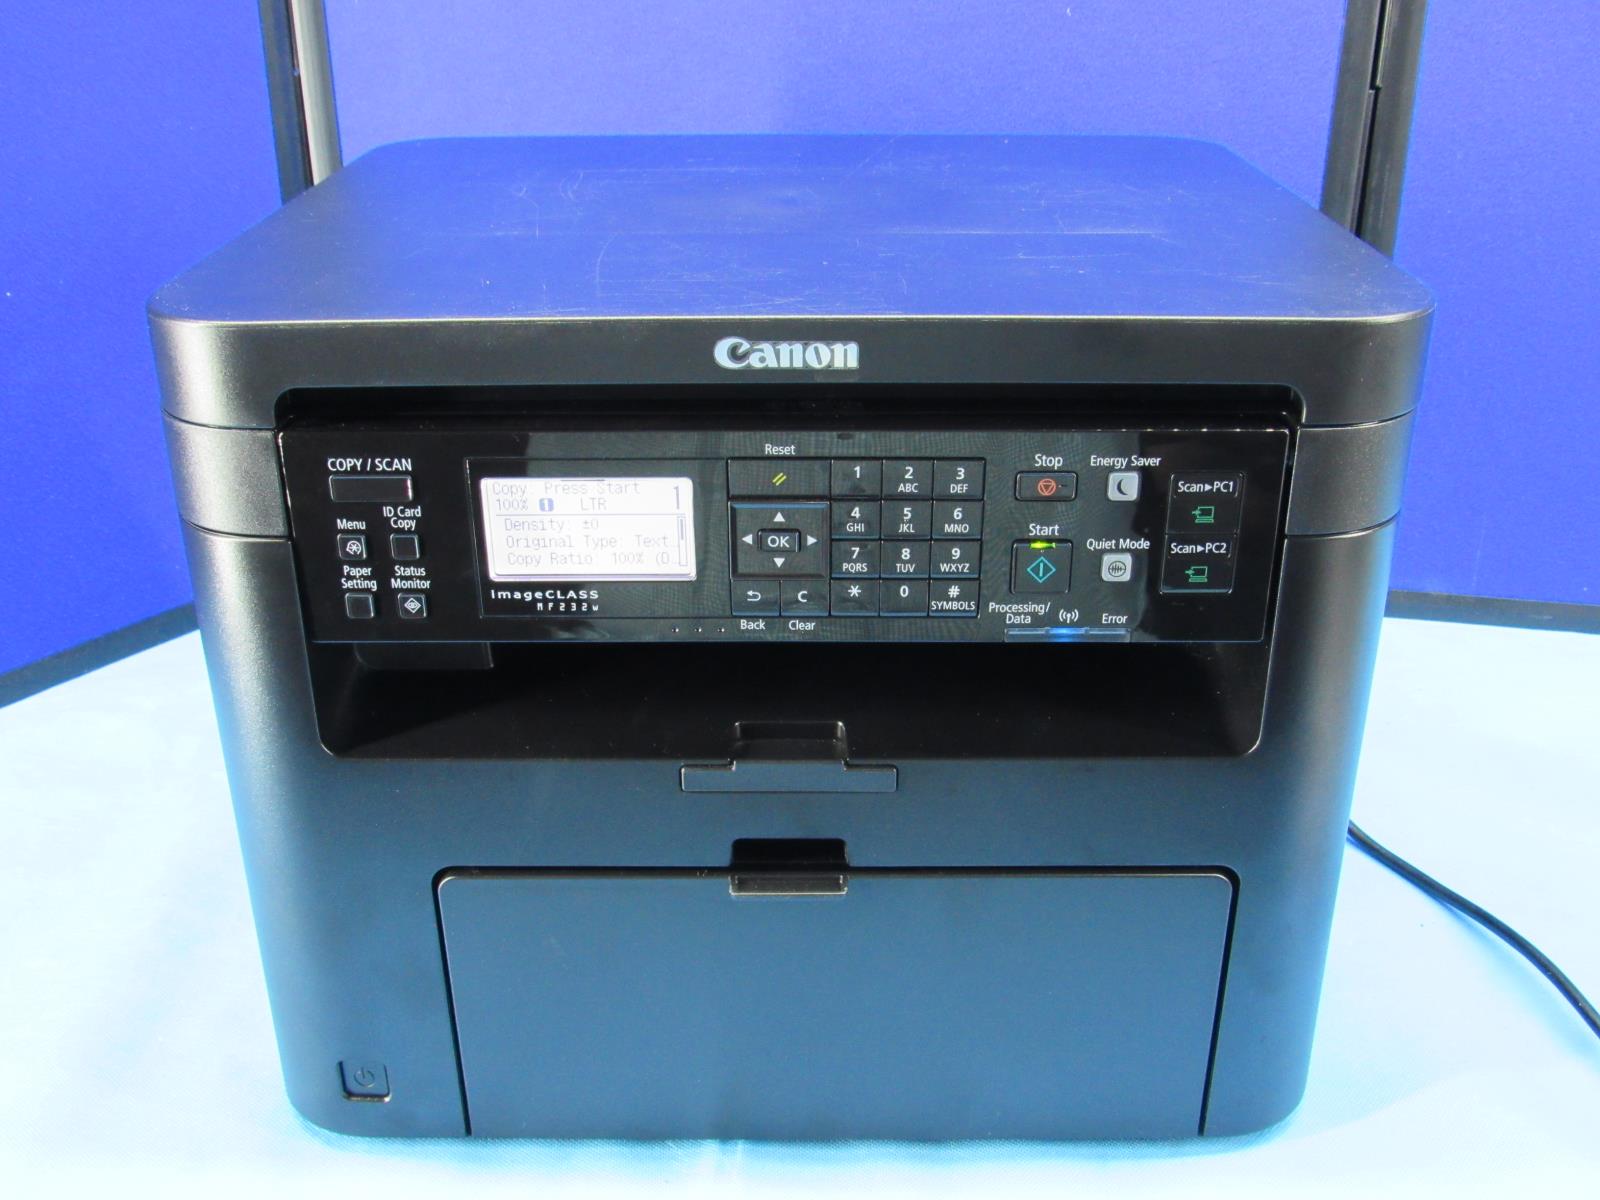 Imprimante laser Canon I-SENSYS MF3010 - It Discount